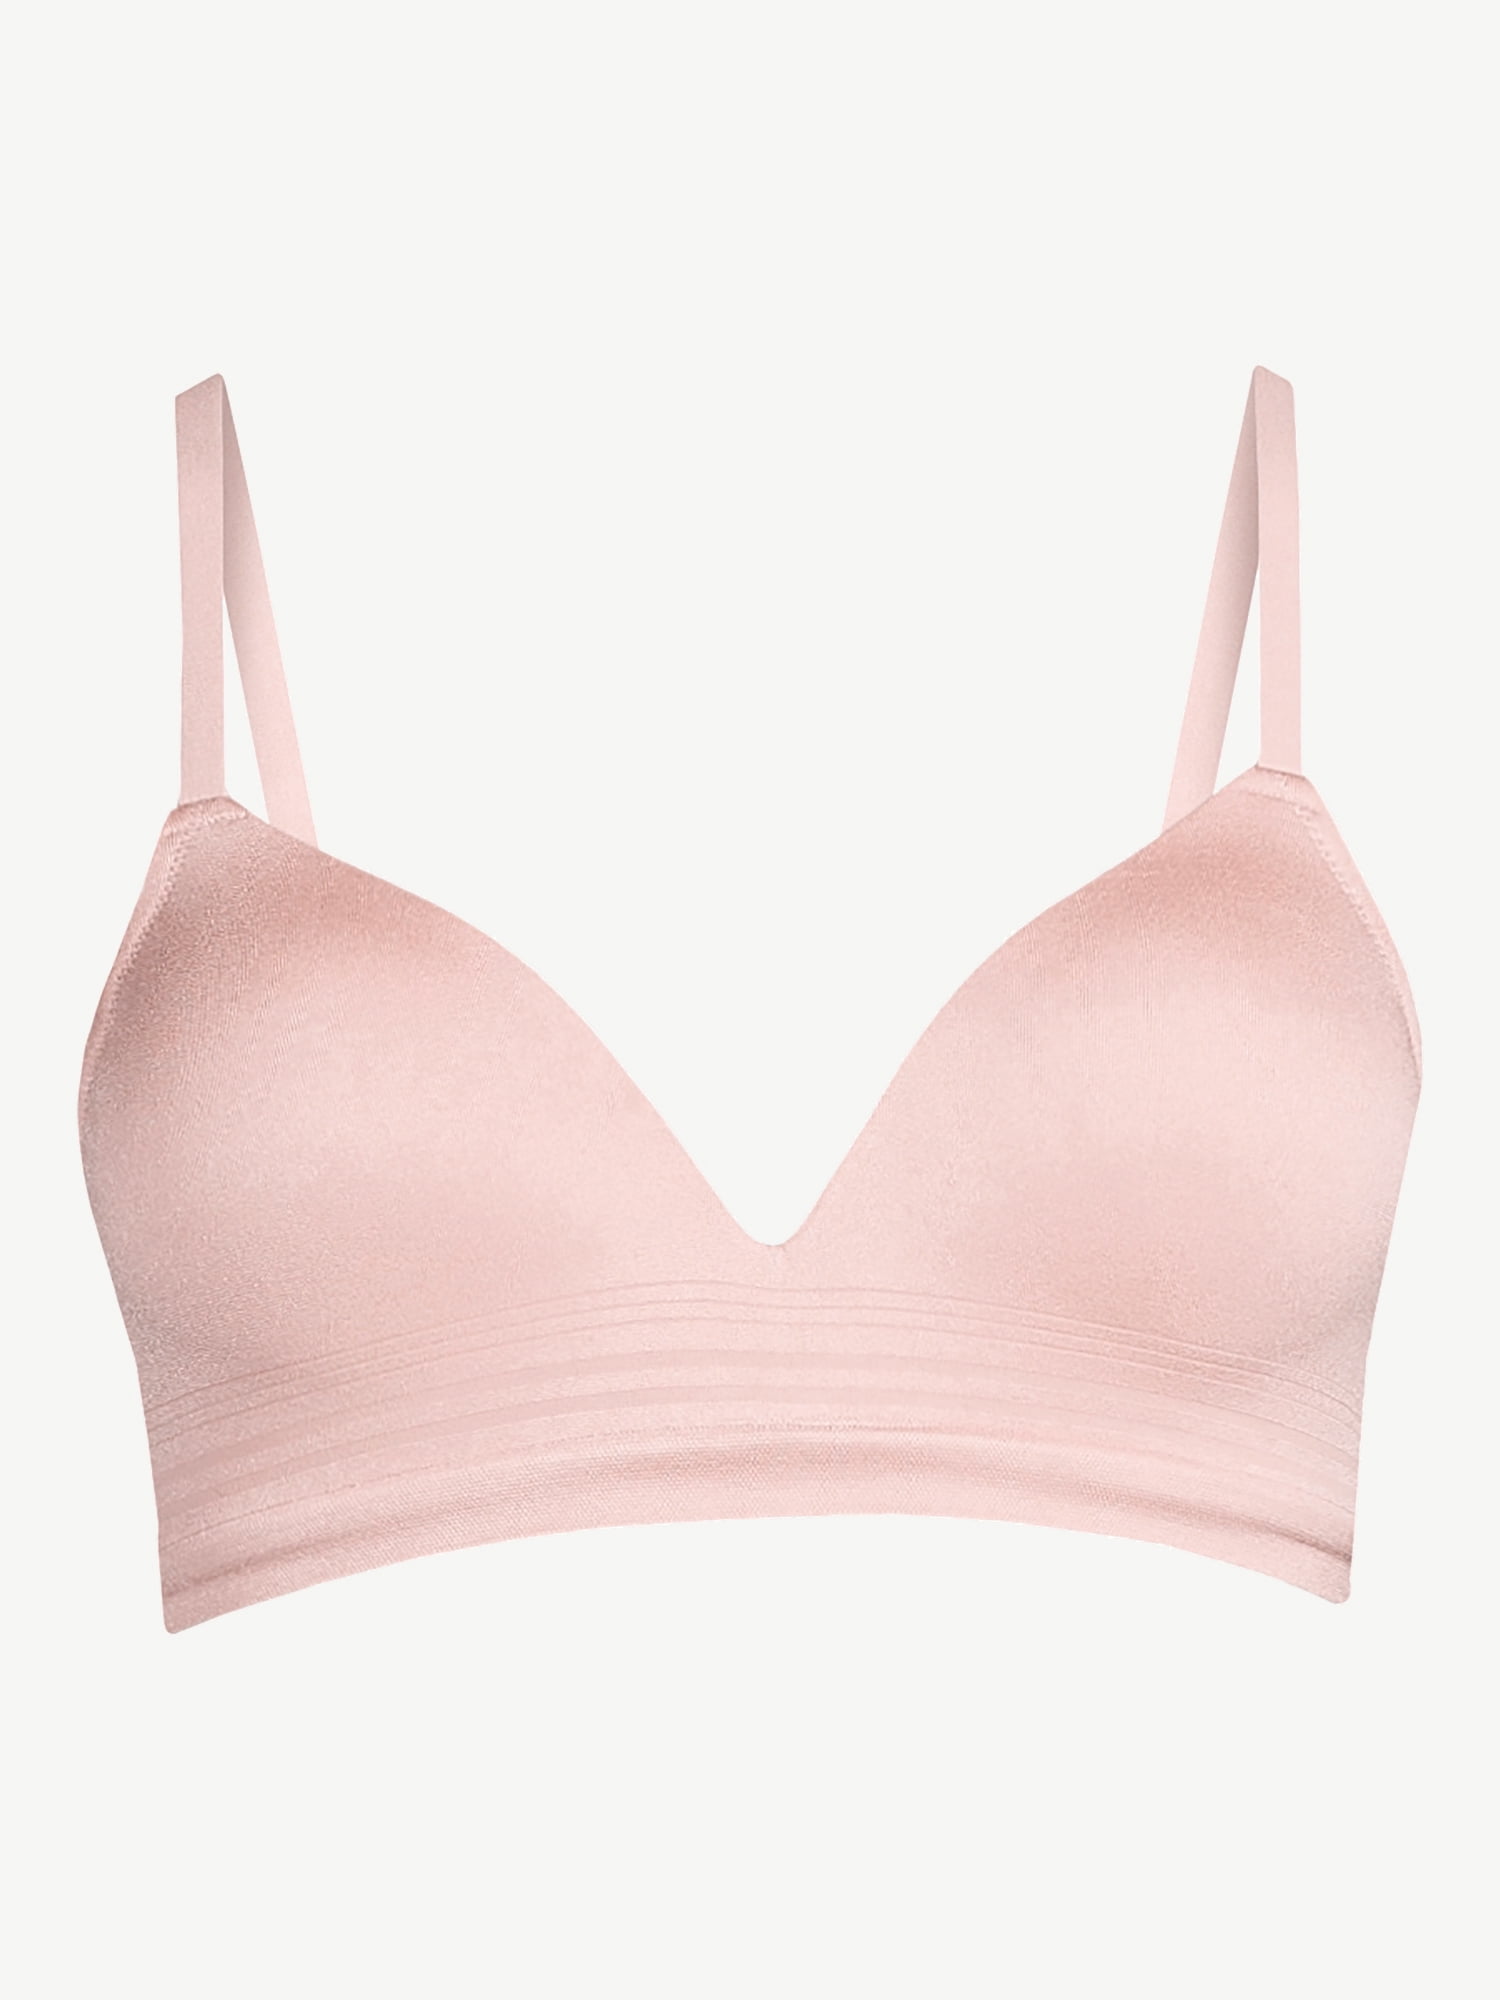 PINK 34A light nude/tan wireless bra with hot pink - Depop